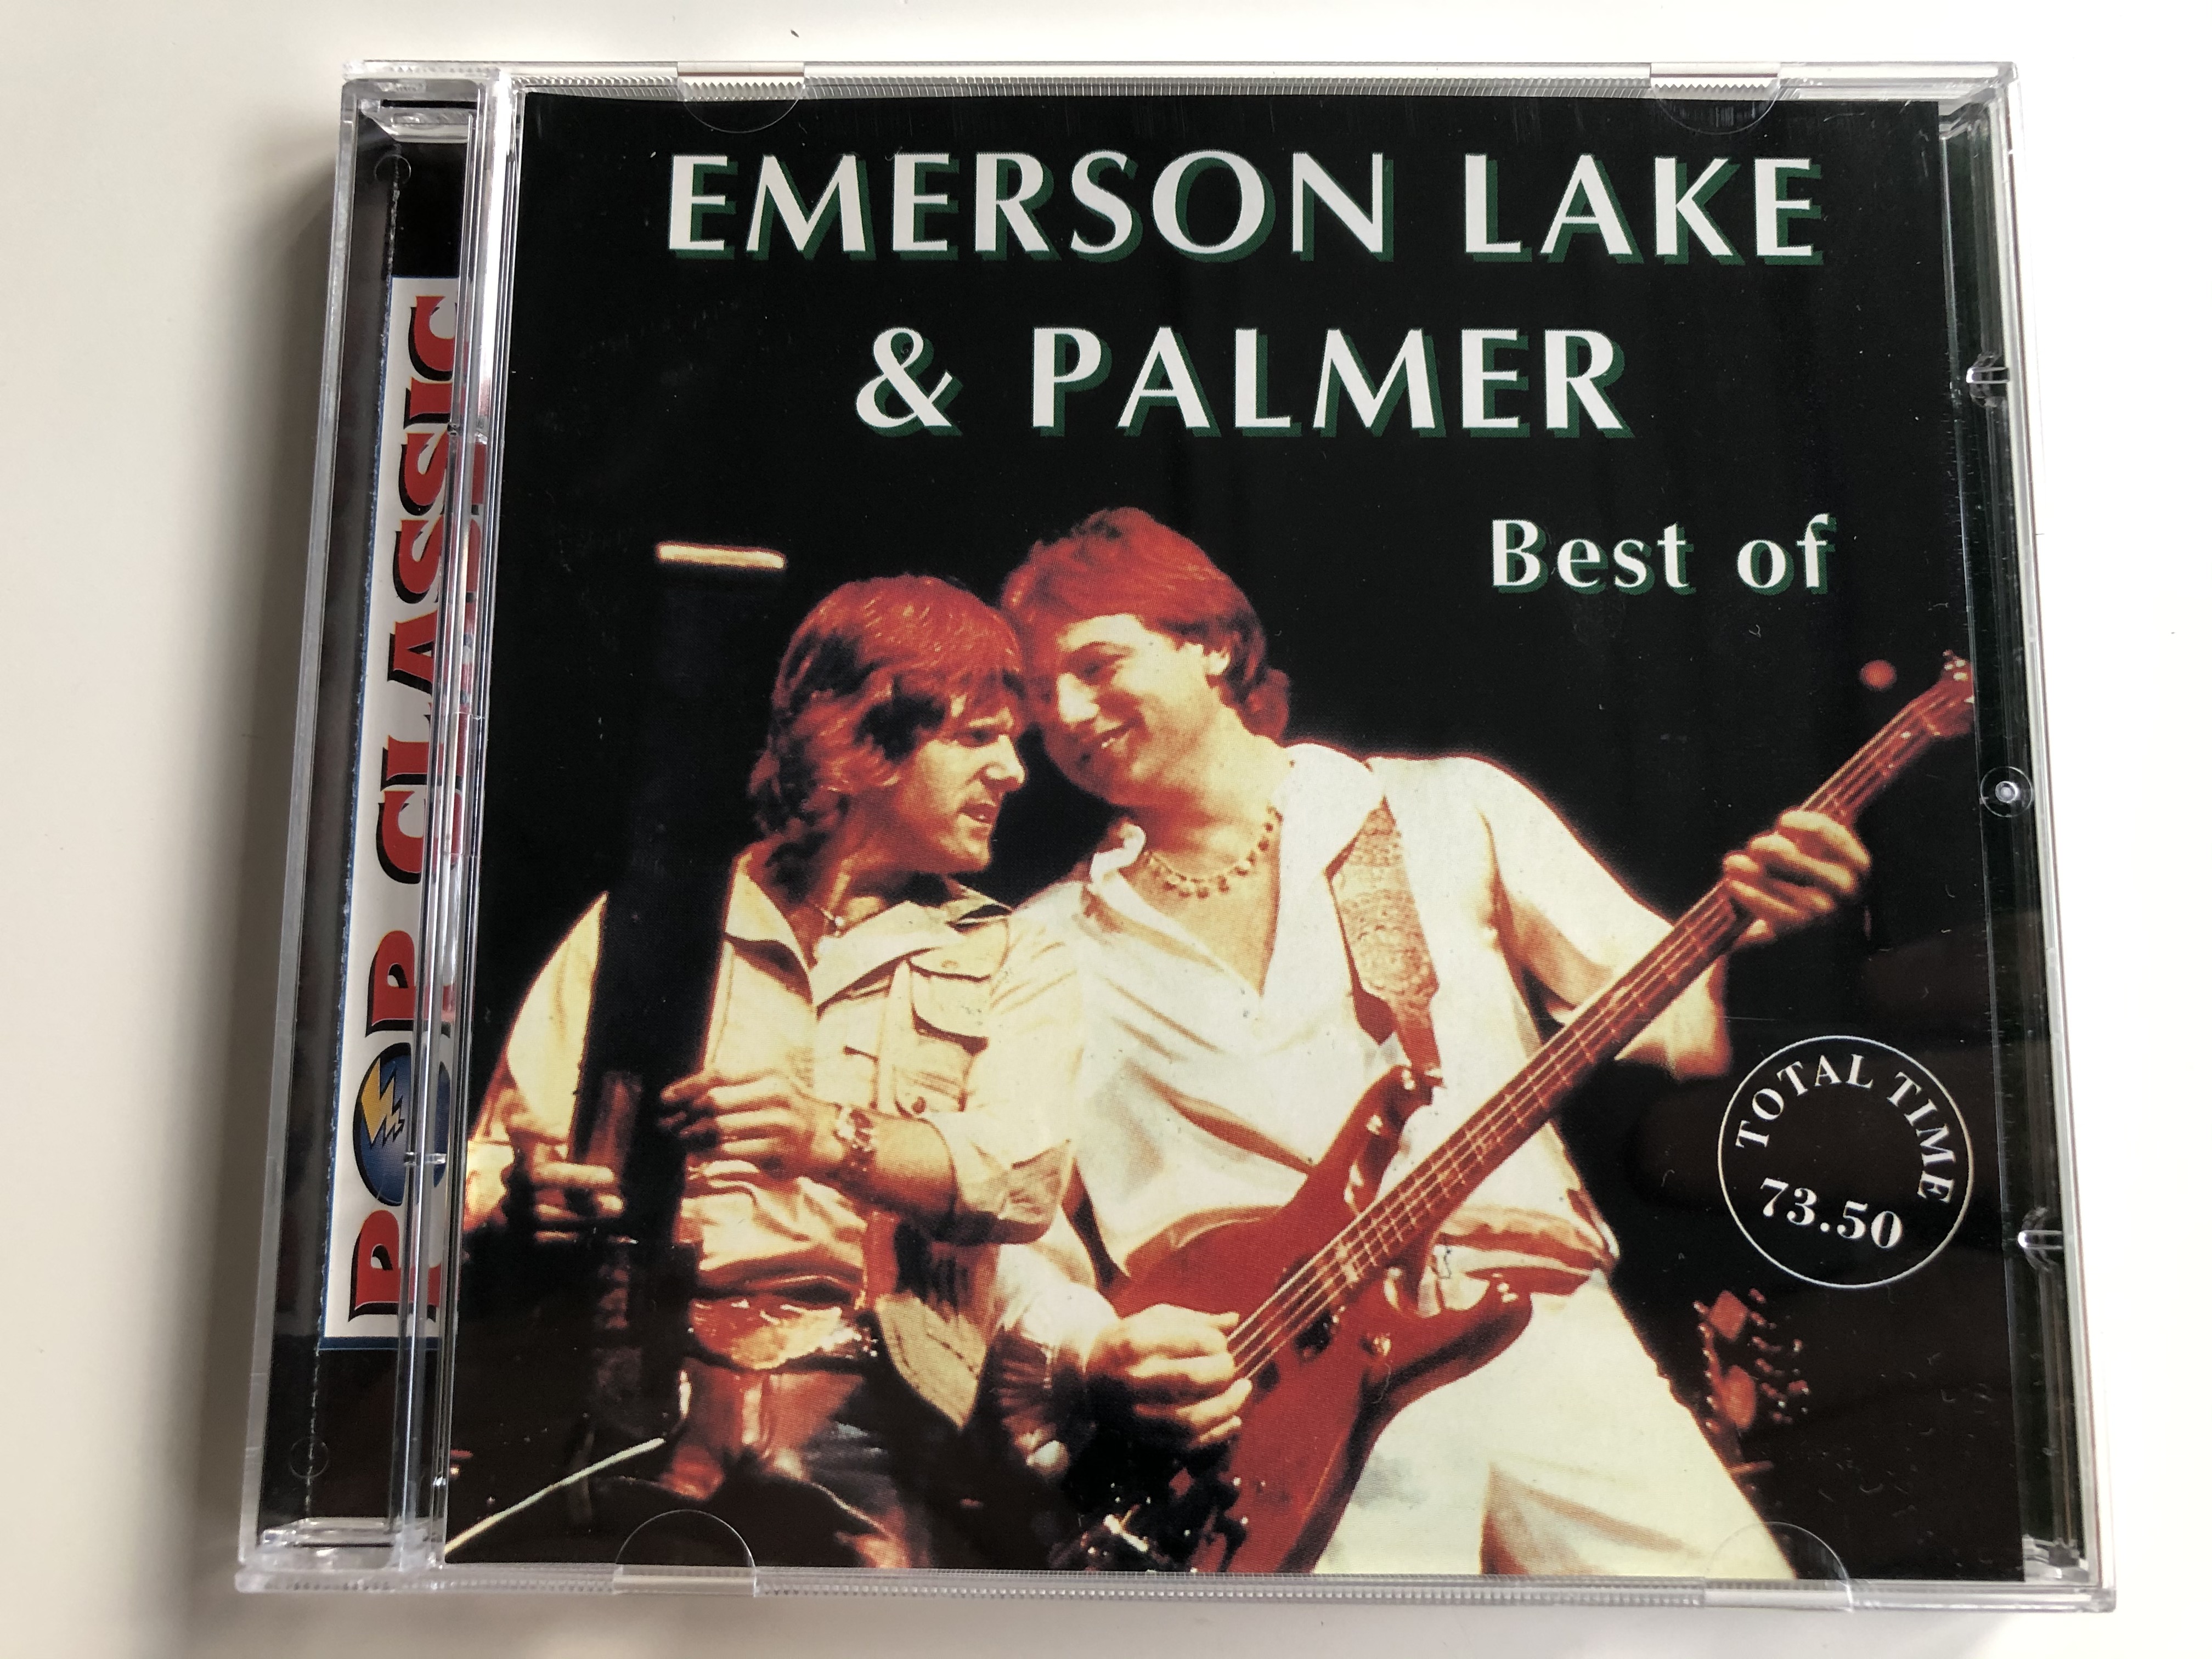 emerson-lake-palmer-best-of-total-time-73.50-pop-classic-euroton-audio-cd-eucd-0076-1-.jpg